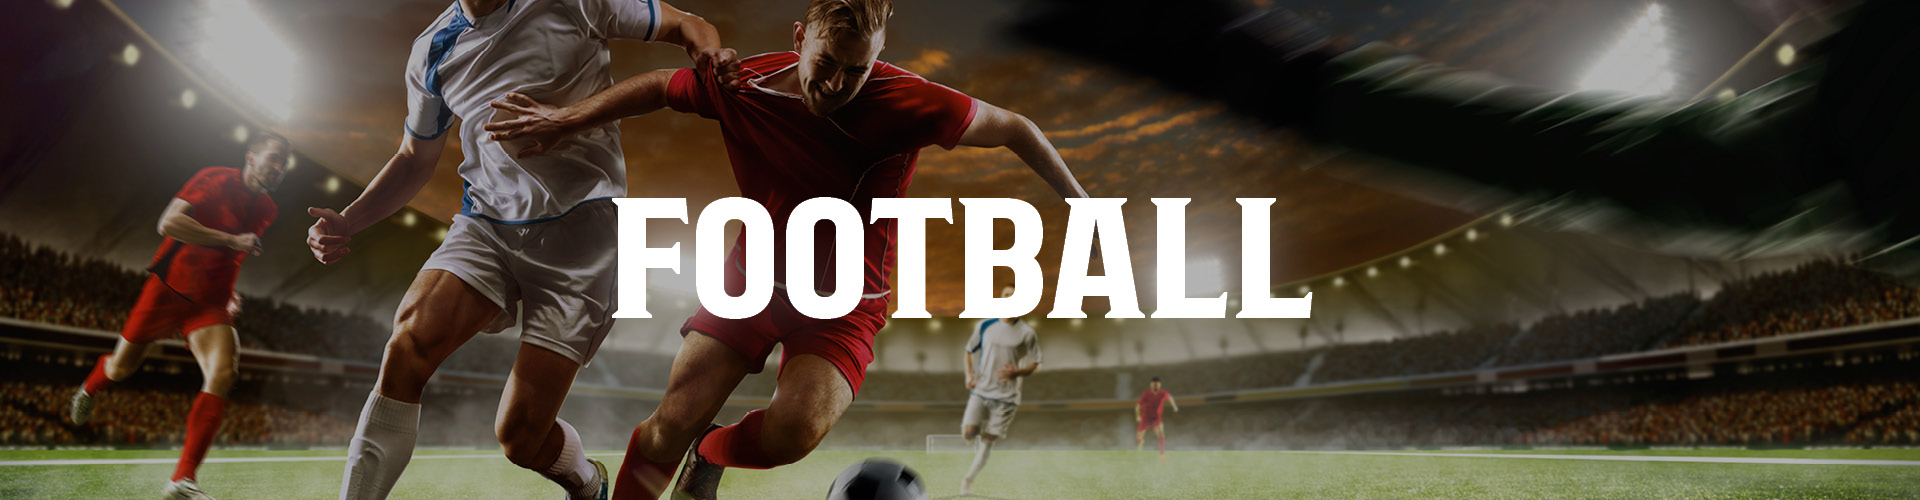 Watch Live Football in Cardiff at Mackintosh Hotel Pub